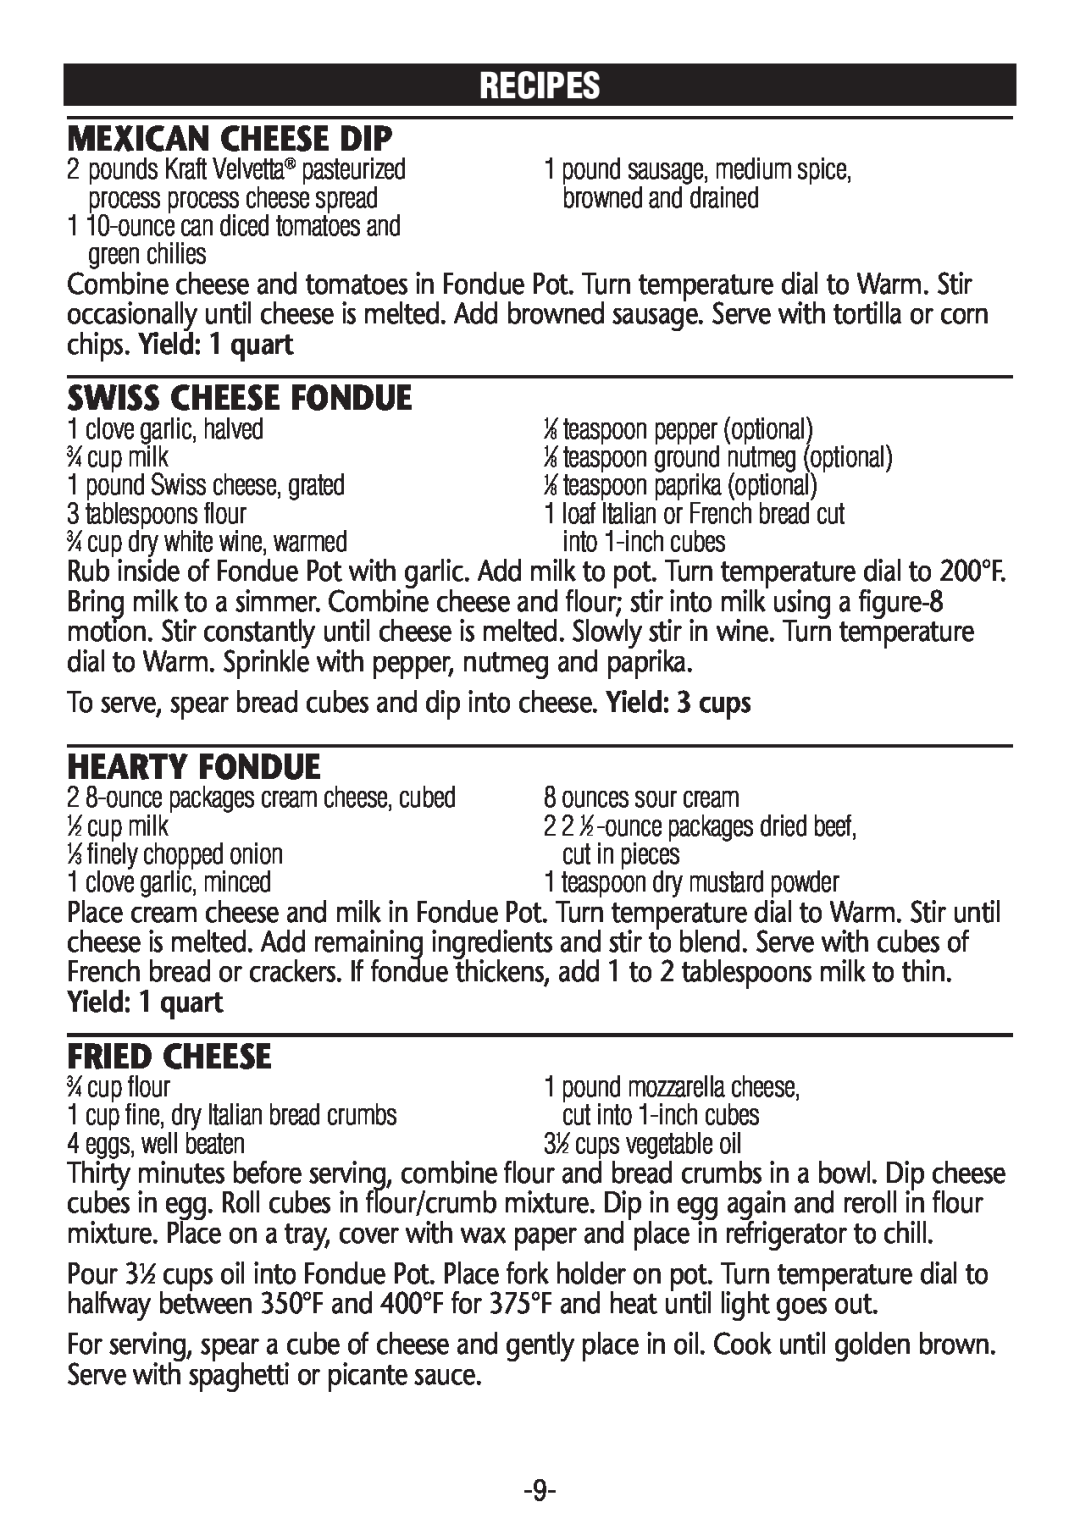 Rival FD350S CN manual Mexican Cheese Dip, Swiss Cheese Fondue, Hearty Fondue, Fried Cheese, Recipes, Yield 1 quart 